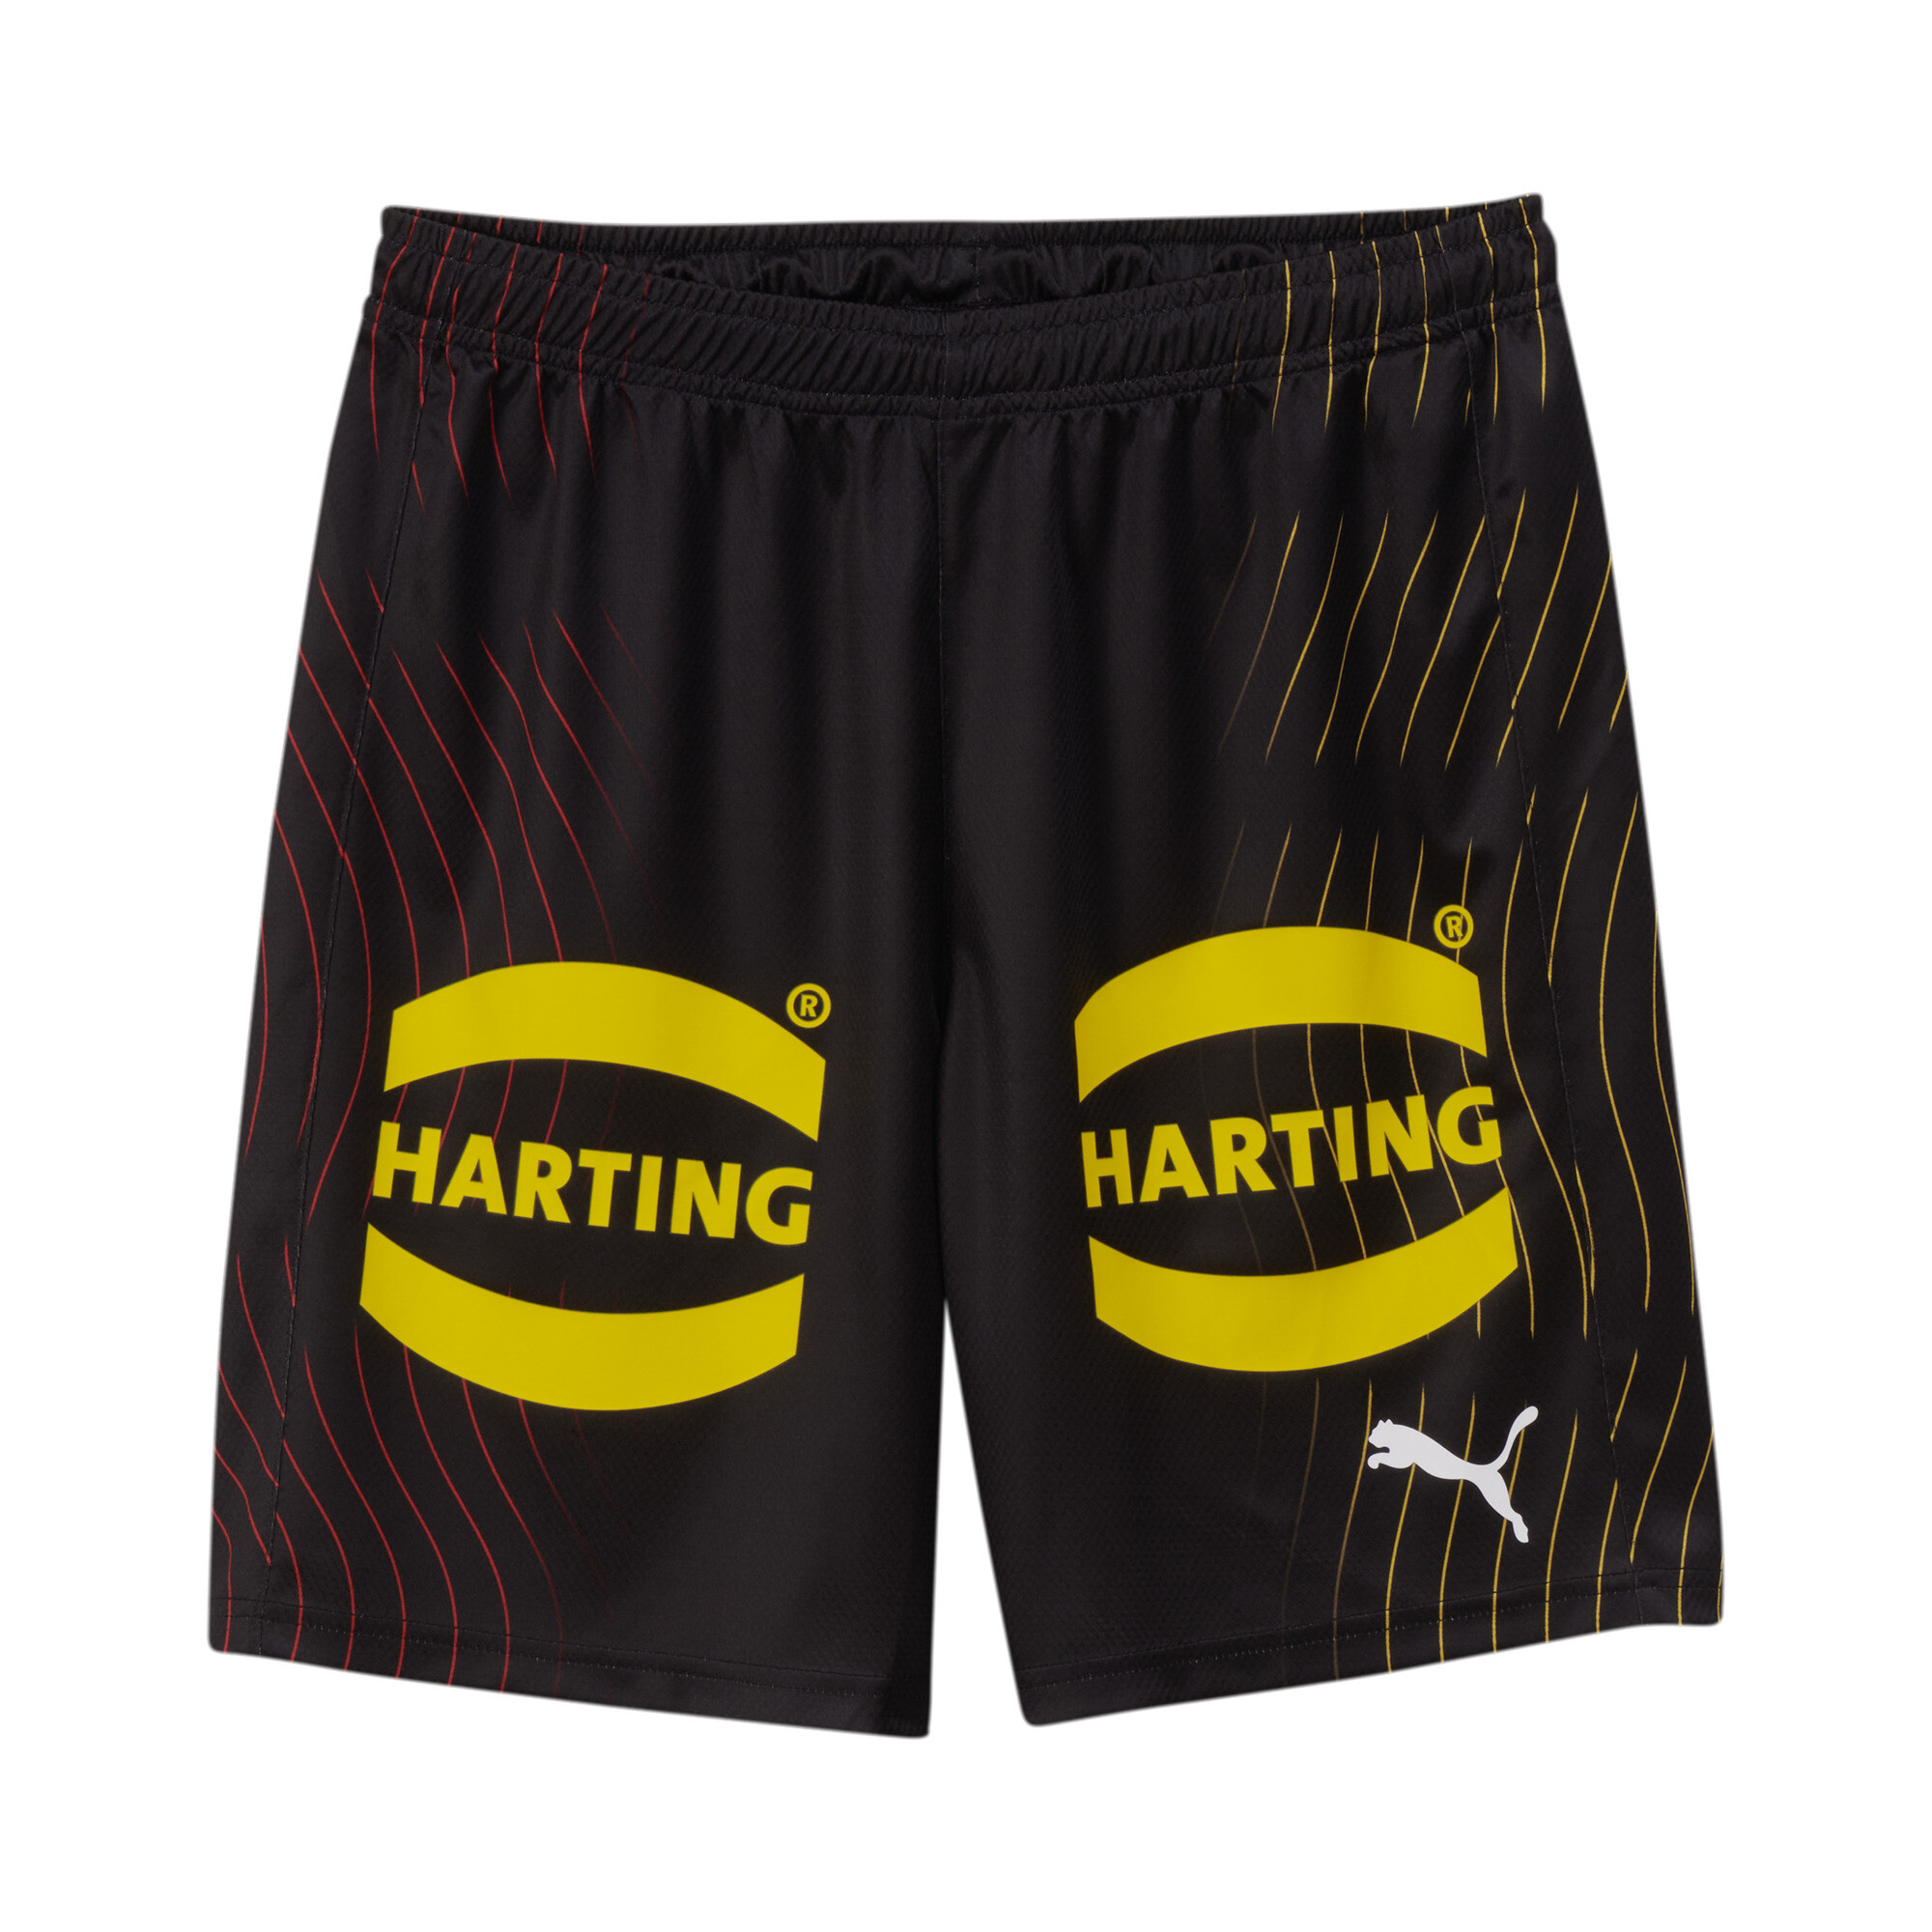 Men's Puma DHB's Handball Shorts, Black, Size L, Clothing